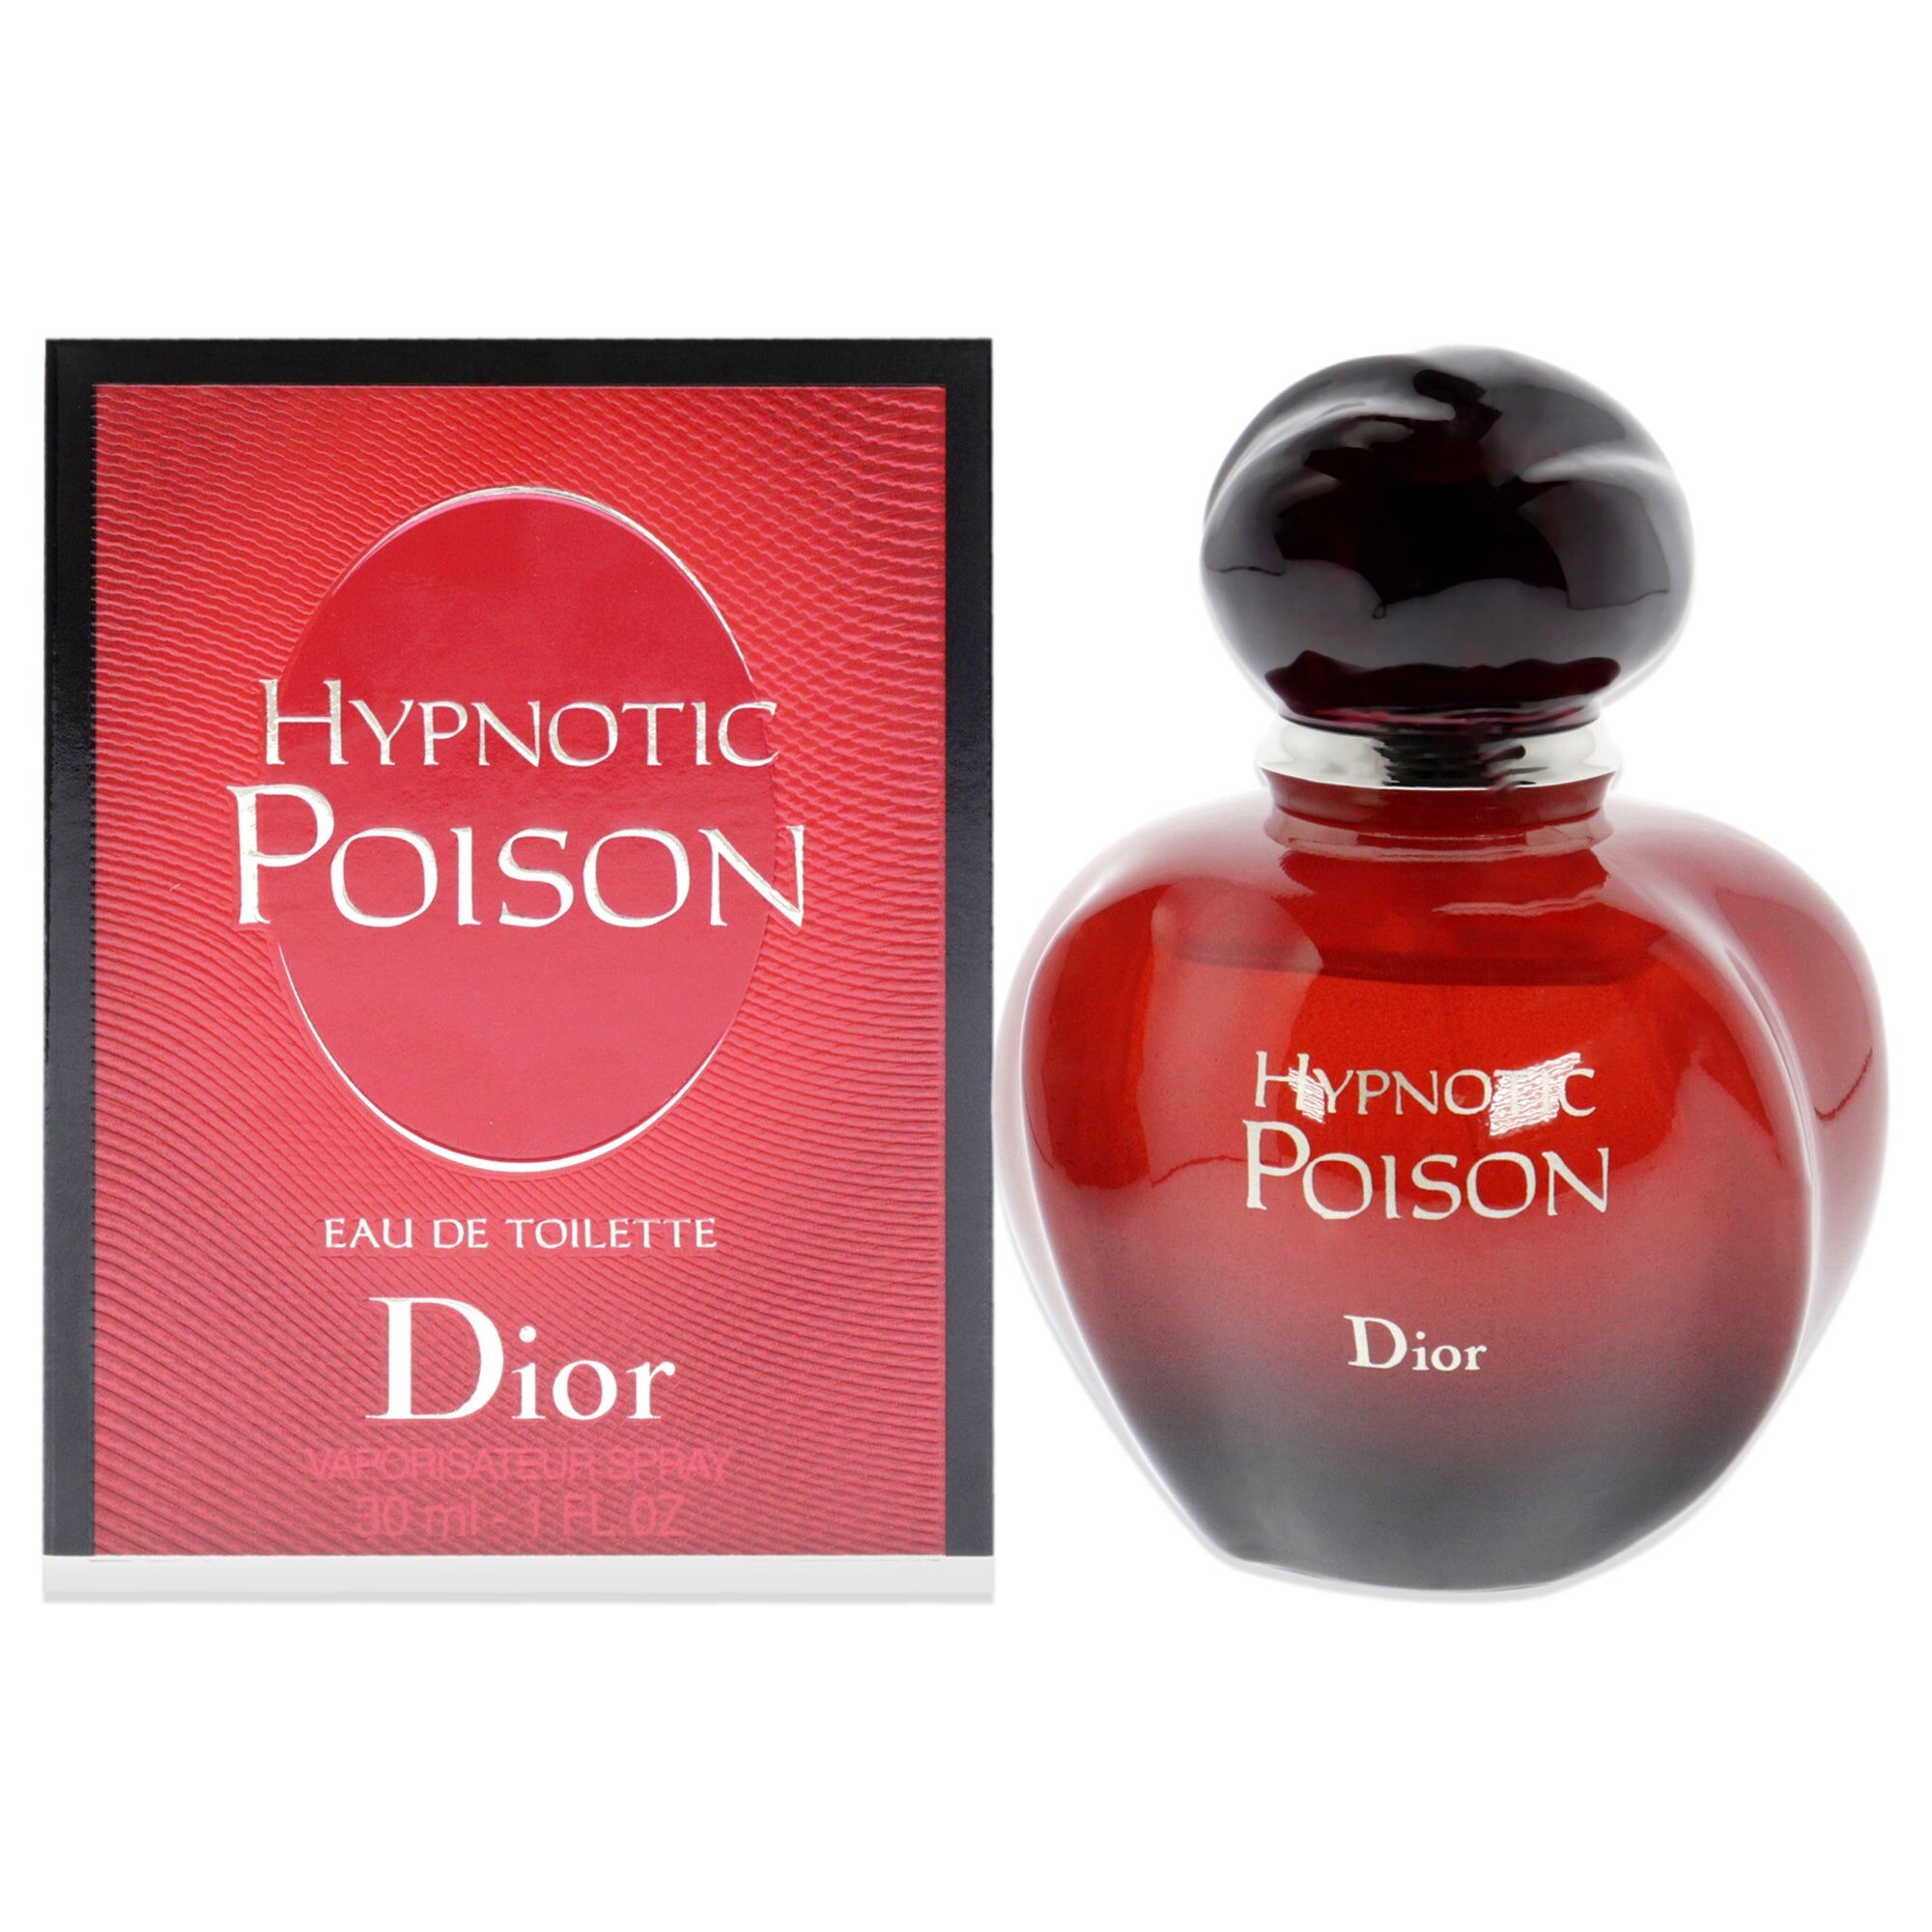 Hypnotic Poison by Christian Dior for Women - 1 oz EDT Spray 1 oz female